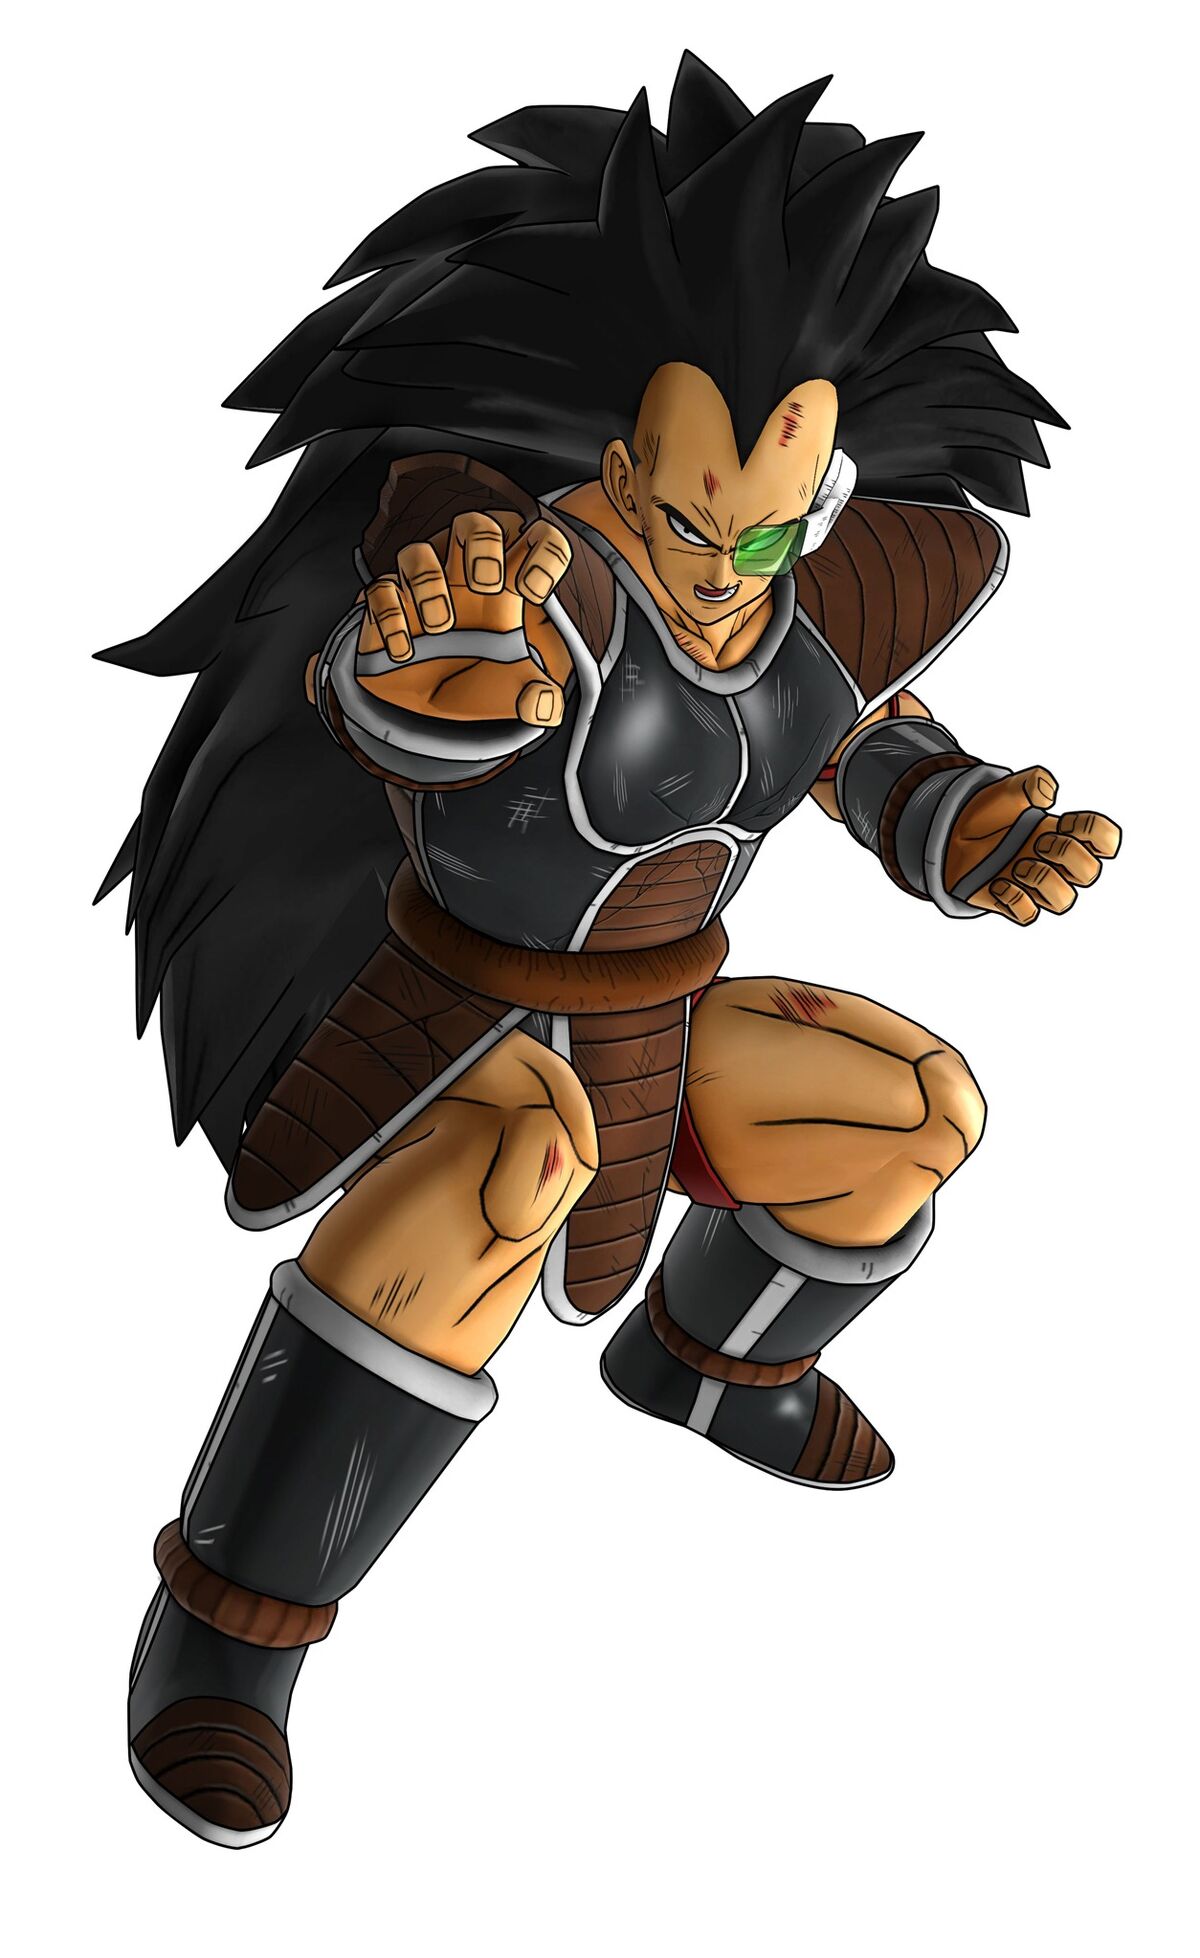 Raditz é um dos antagonistas da saga Saiyajin de Dragon Ball Z